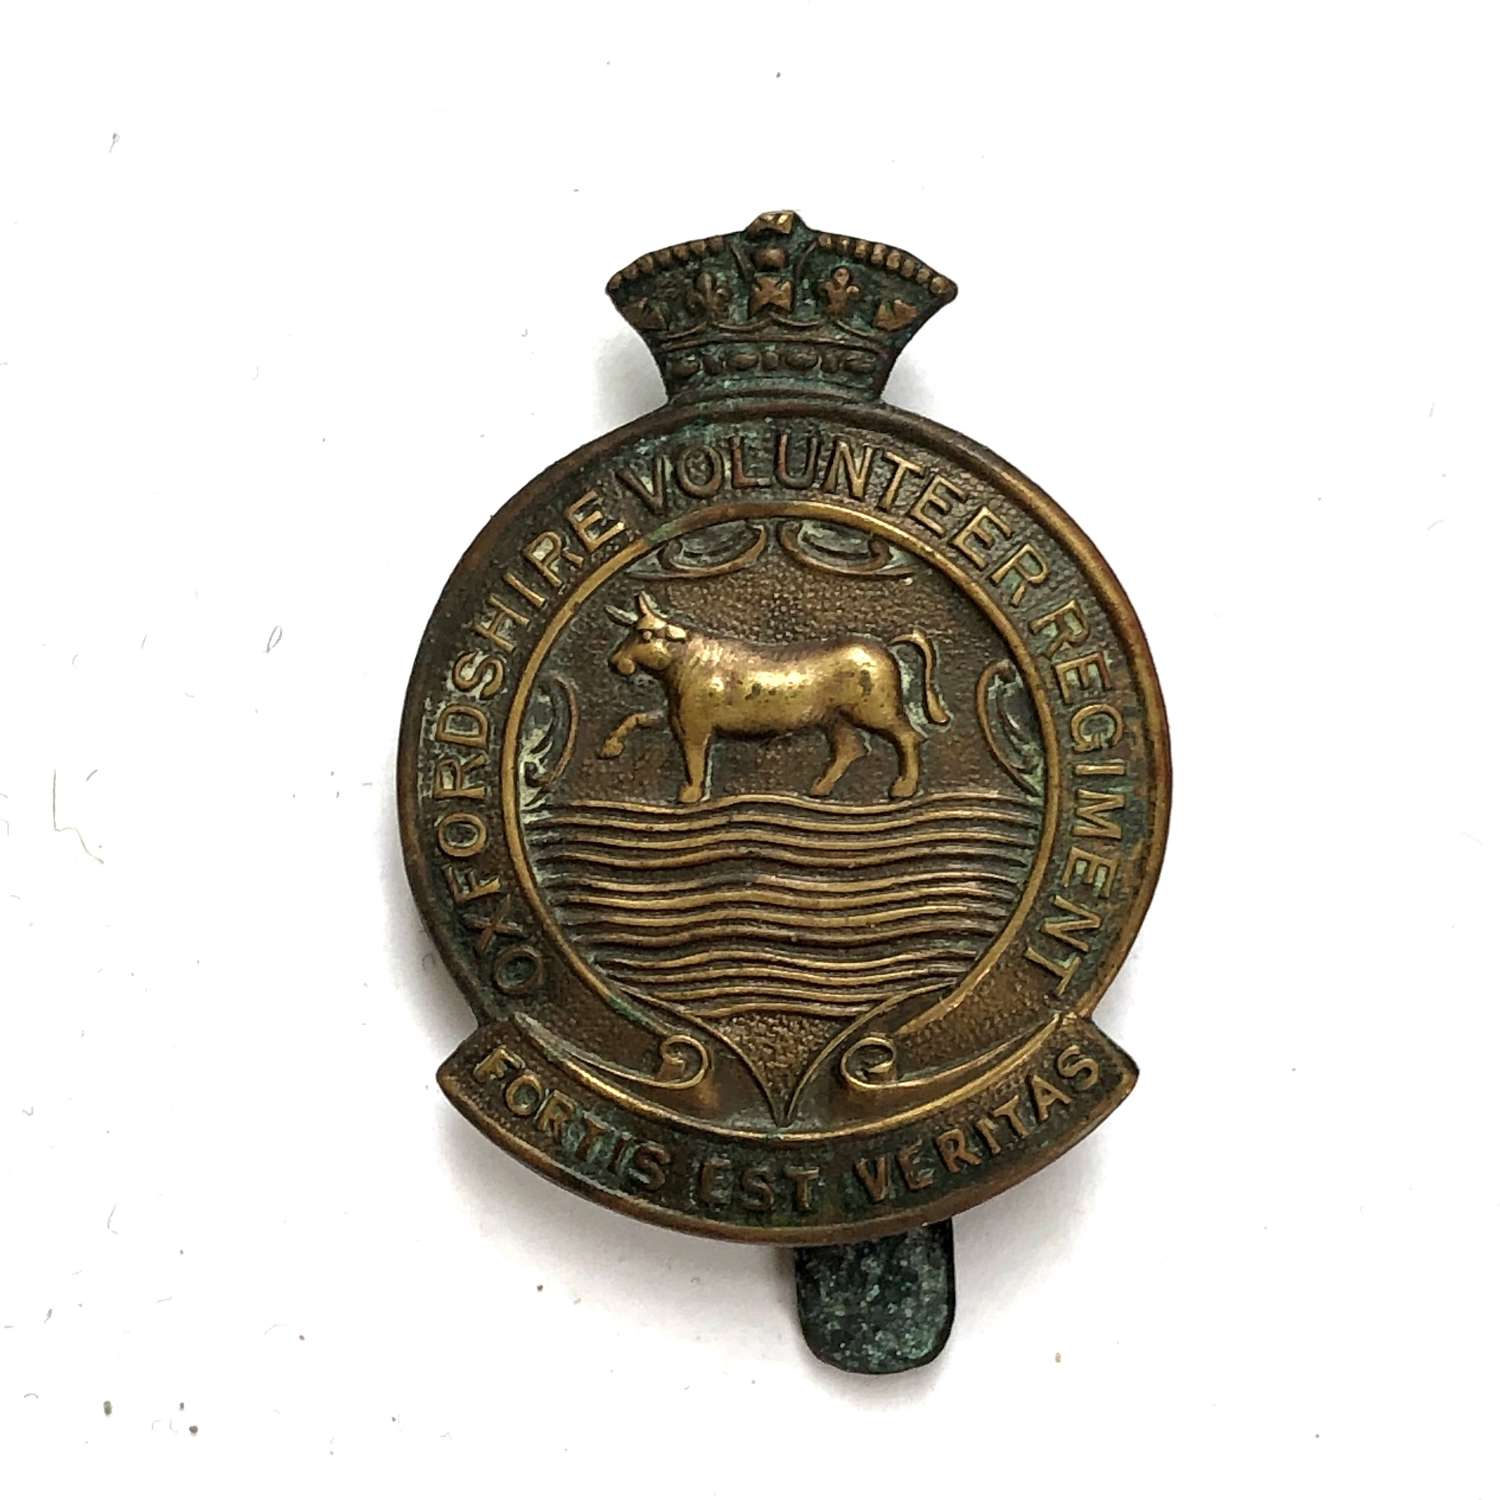 Oxfordshire Volunteer Regiment WW1 VTC cap badge